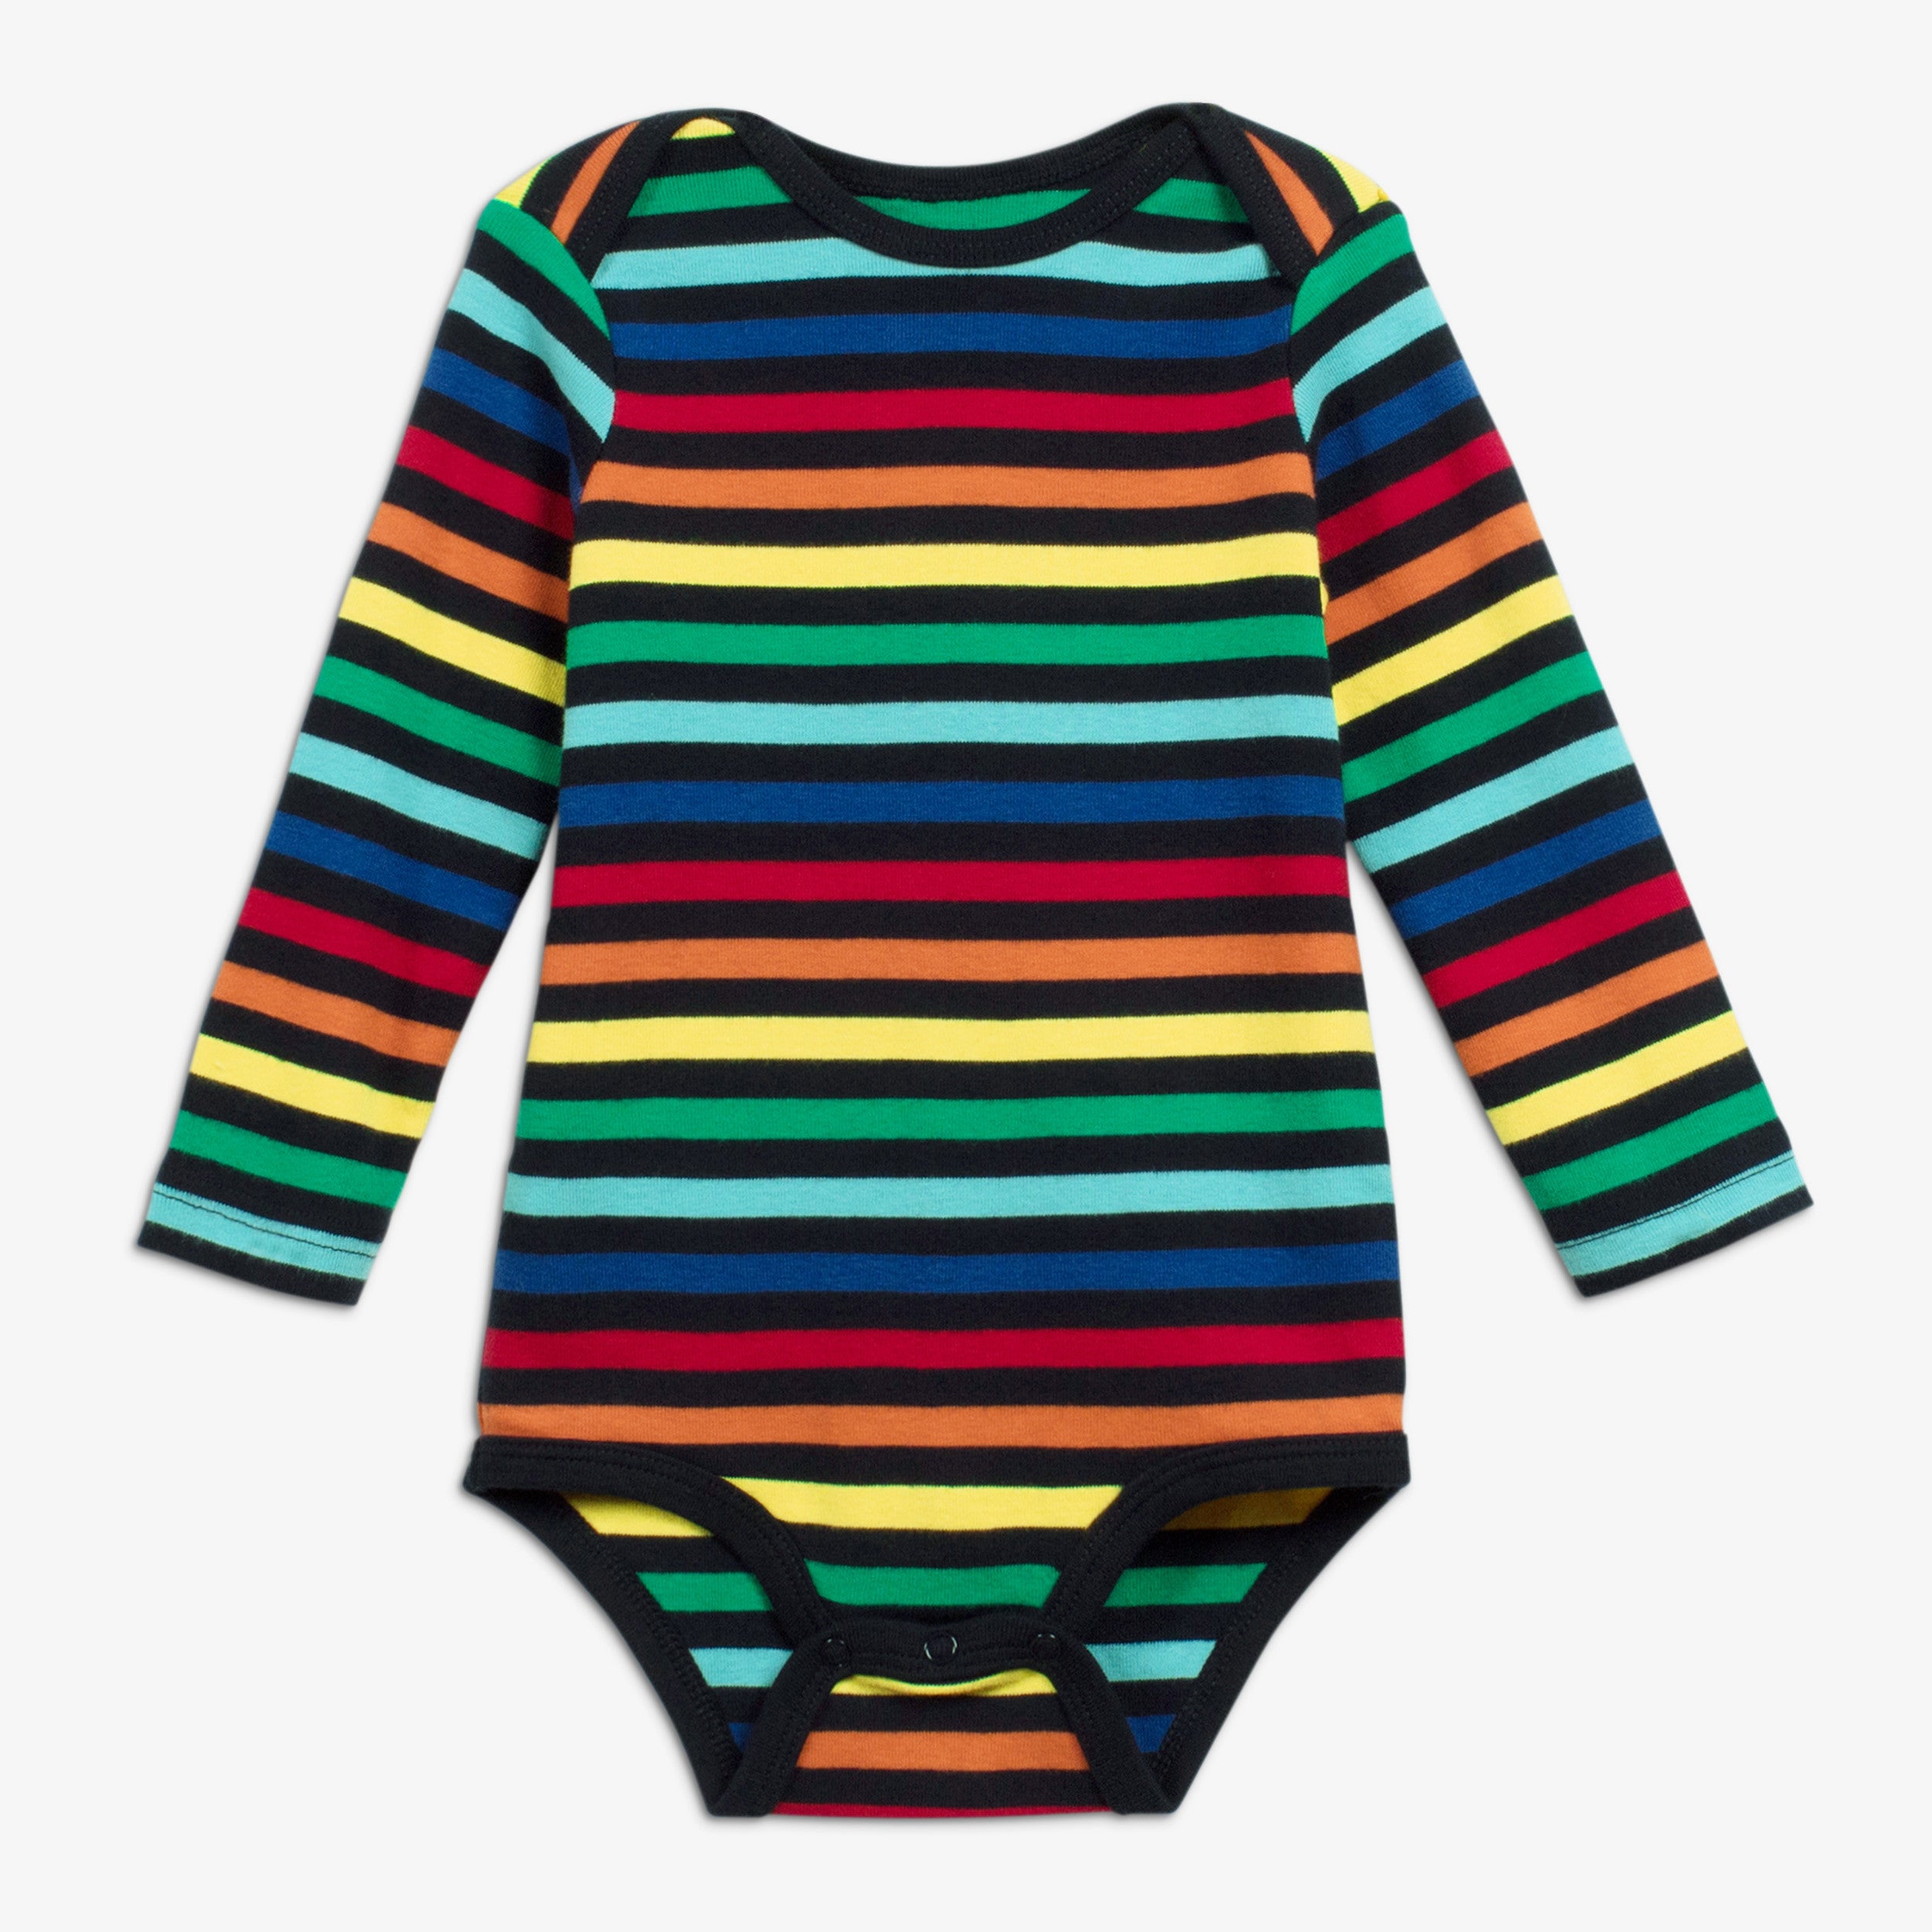 Baby legging in rainbow stripe